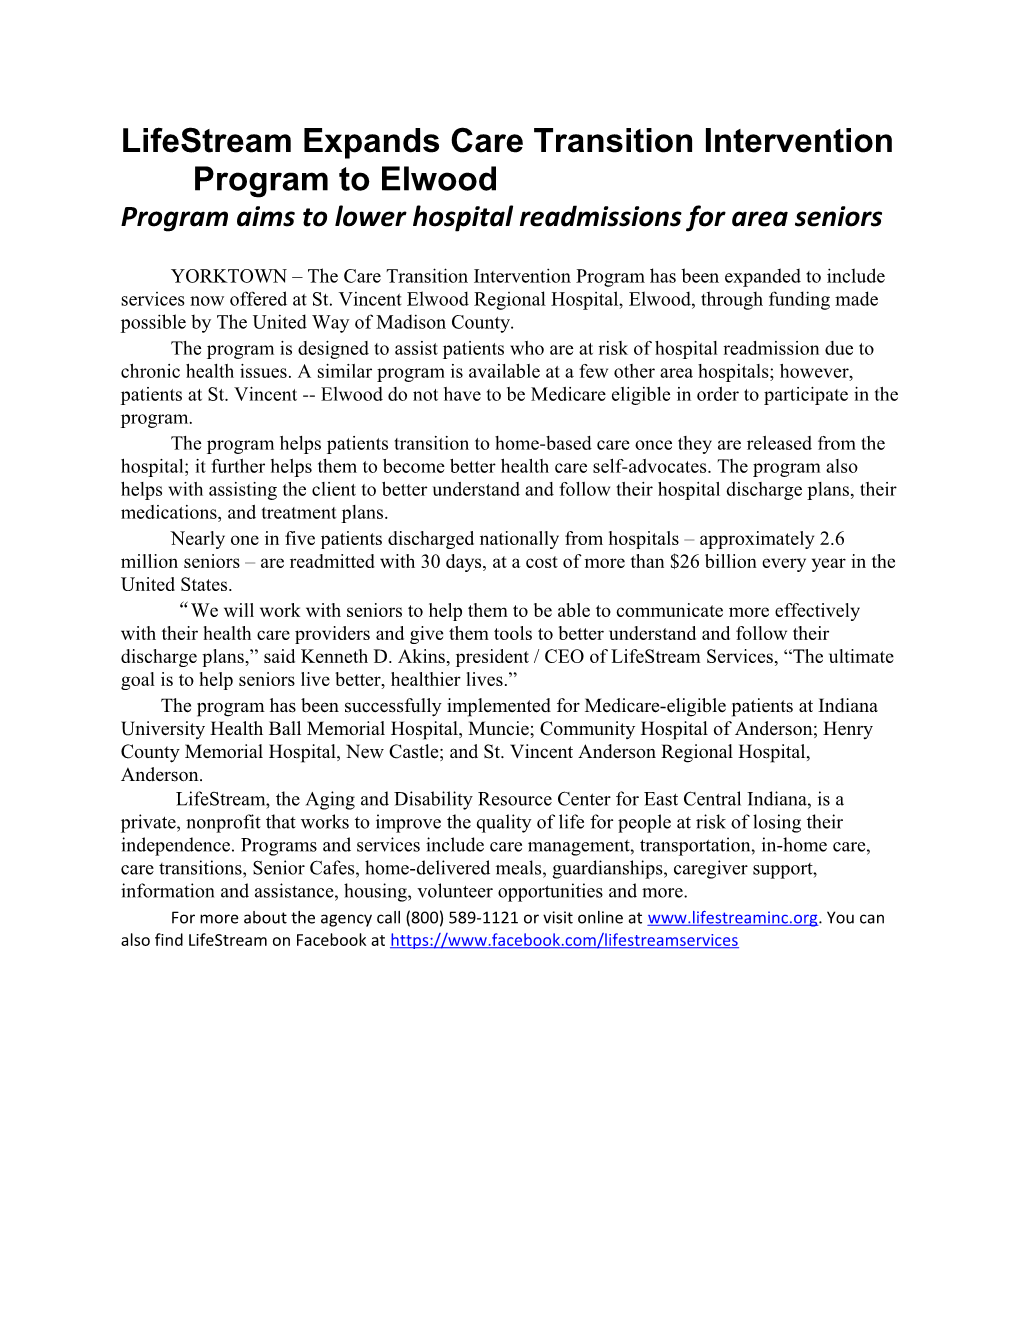 Lifestream Expands Care Transition Intervention Program to Elwood